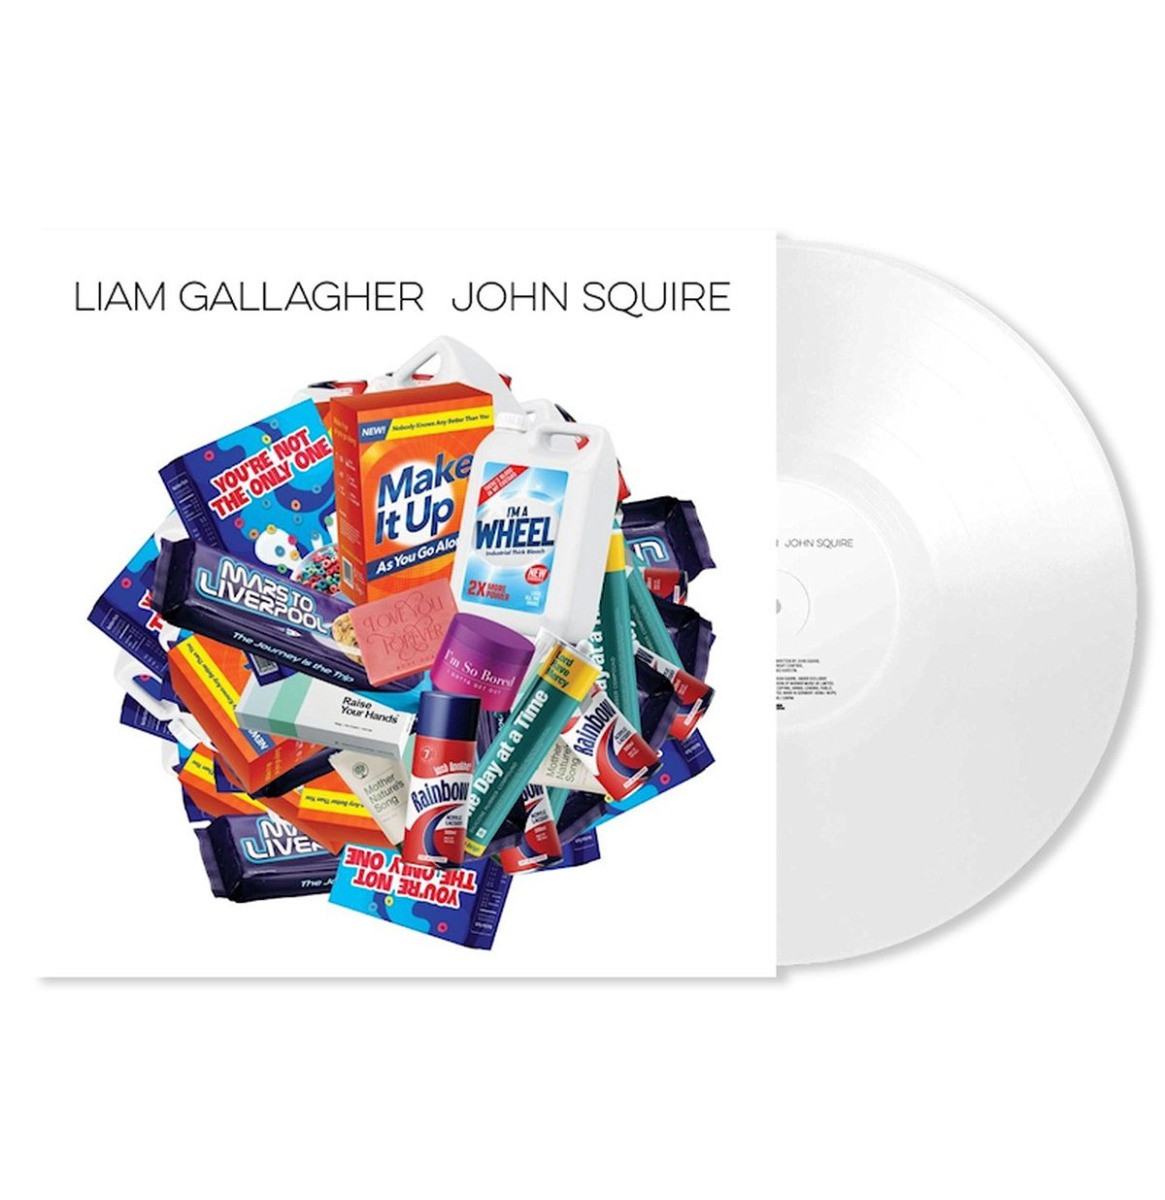 Liam Gallagher & John Squire - Liam Gallagher & John Squire (Wit Vinyl) LP